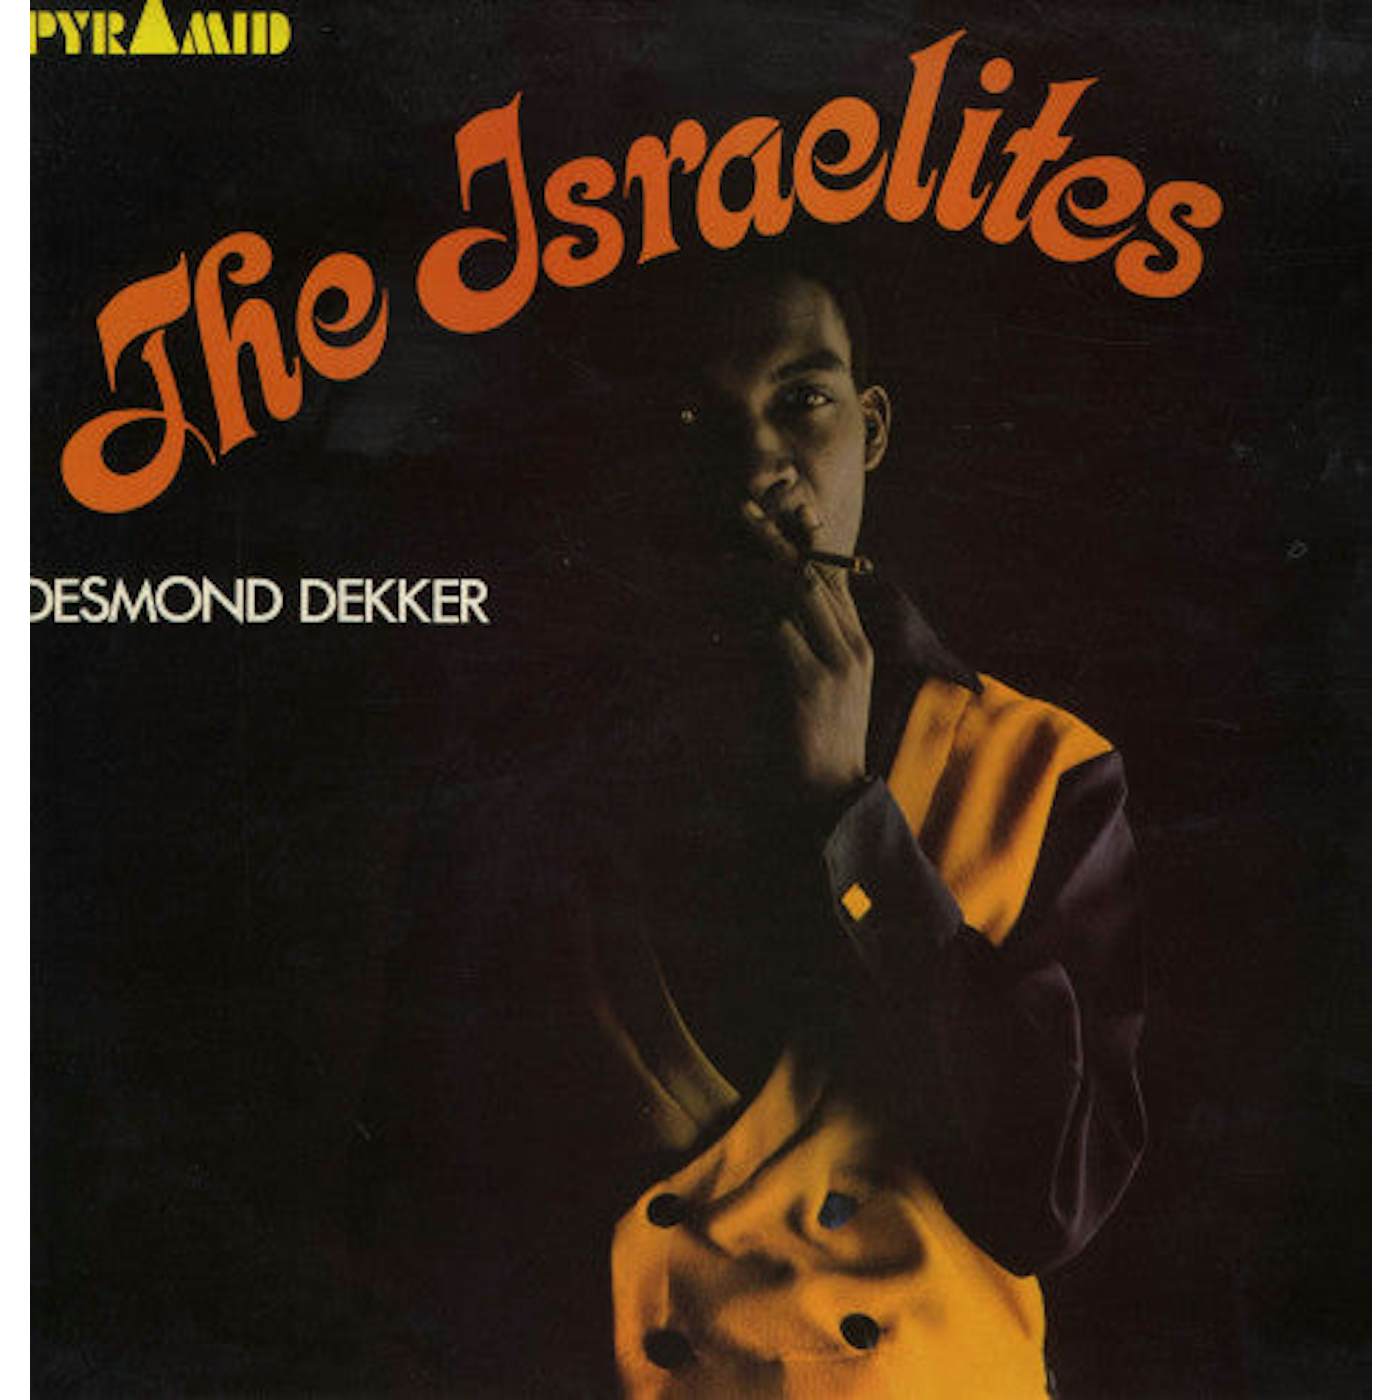 Desmond Dekker & The Aces Desmond Dekker LP Vinyl Record - The Israelites